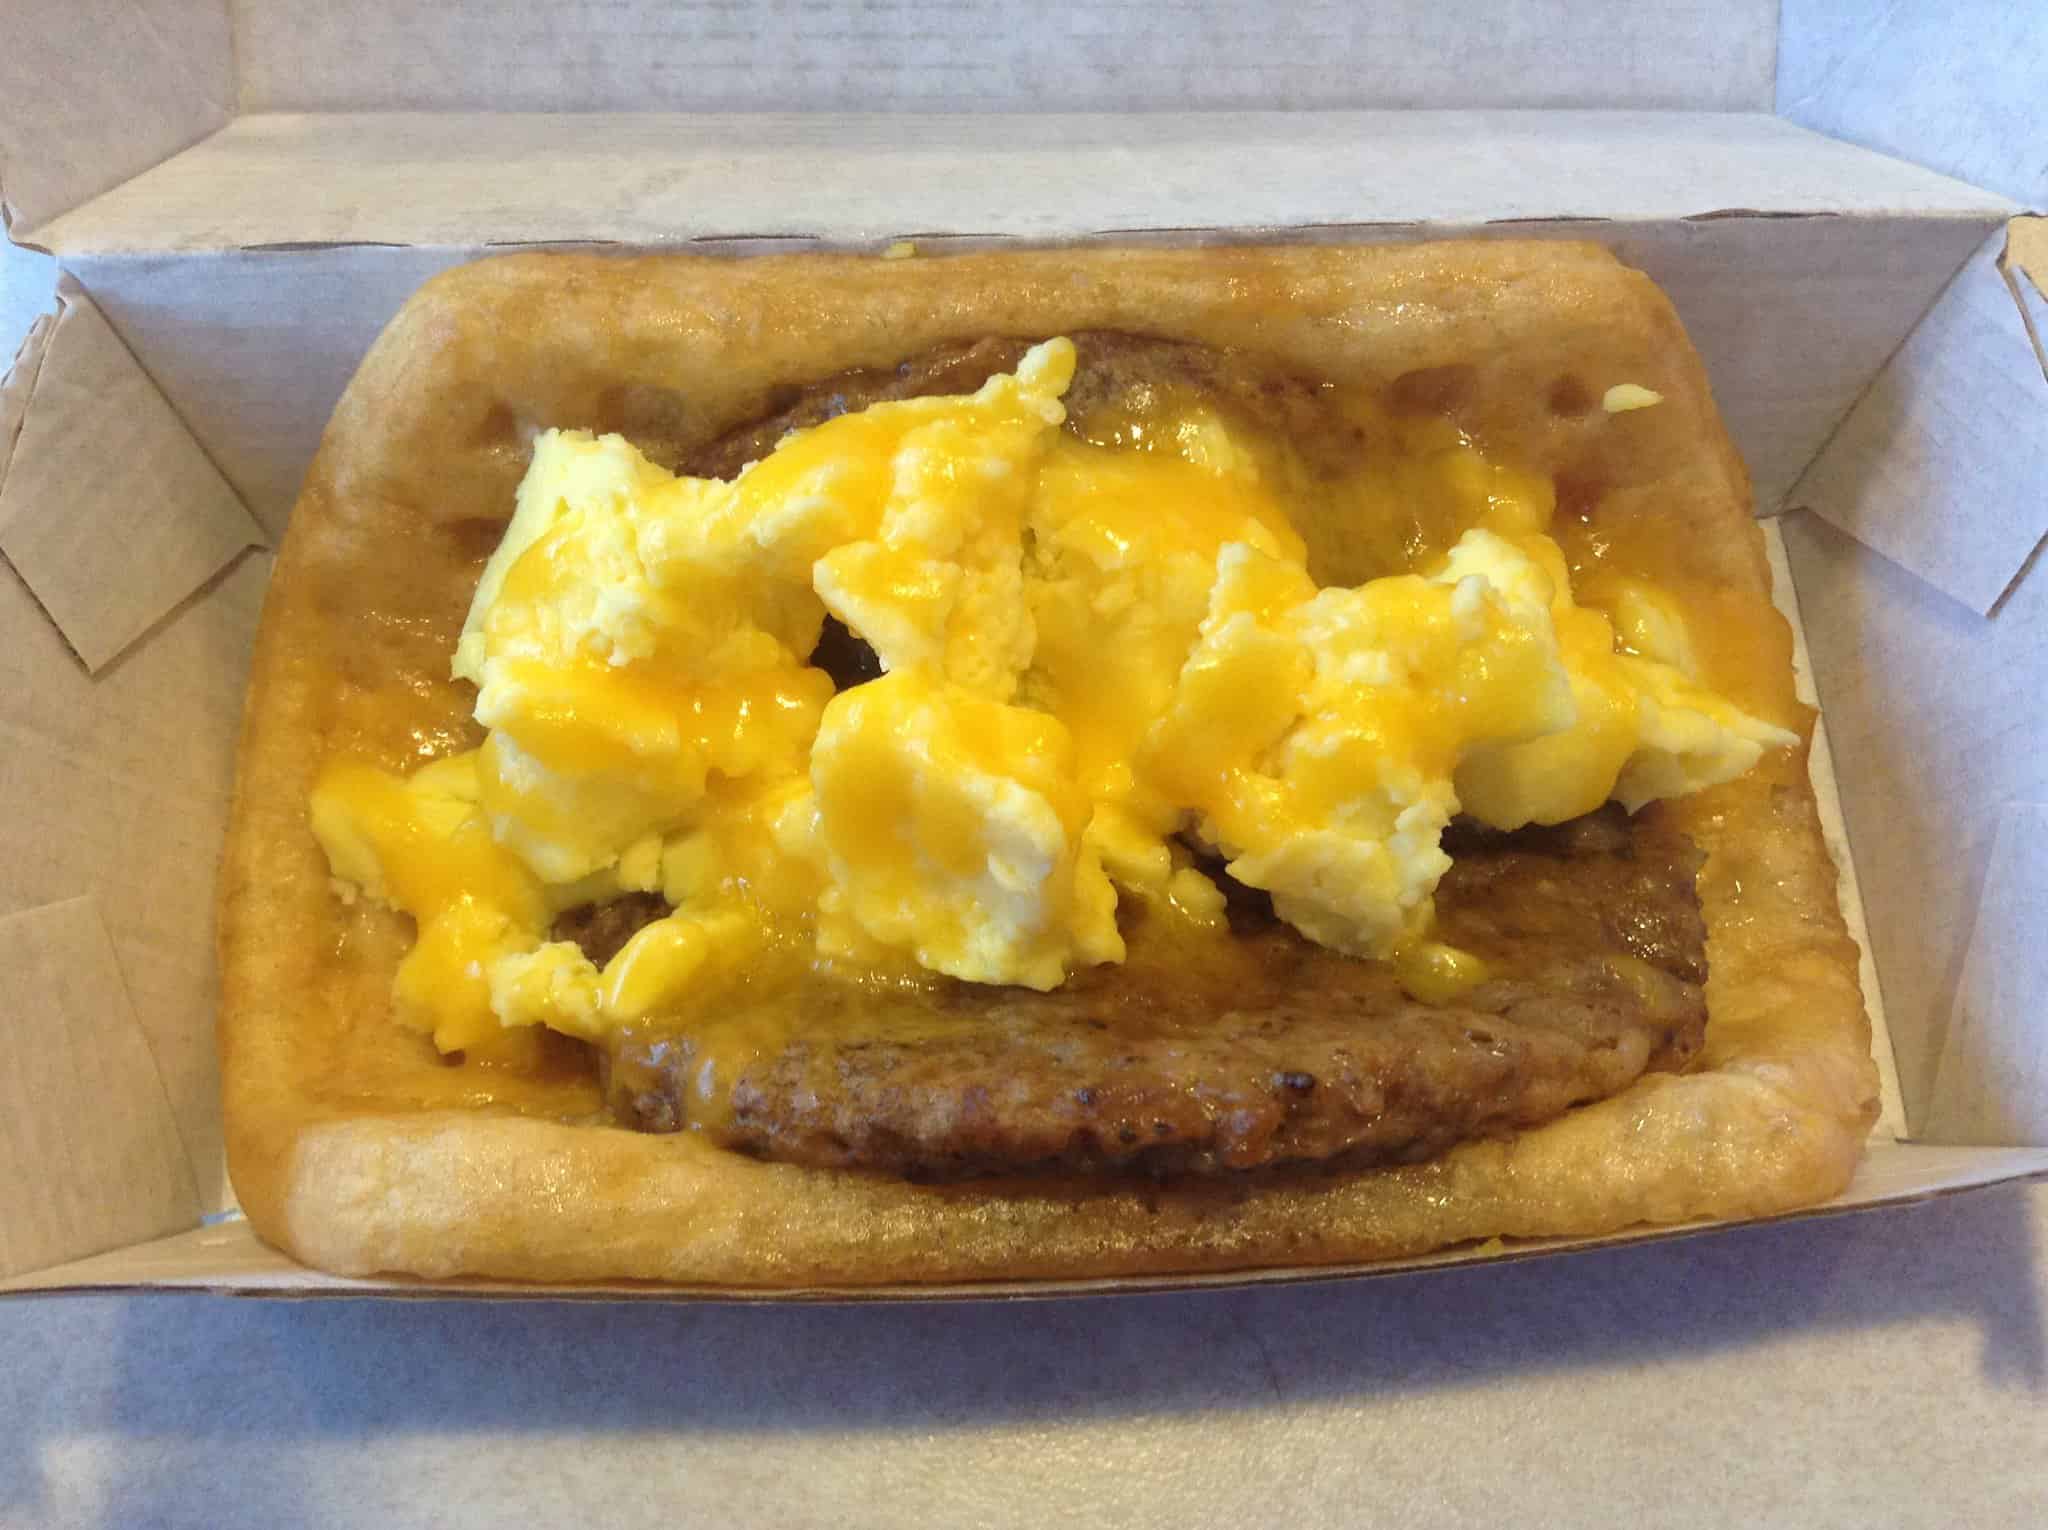 Taco Bell Breakfast by Mike Mozart